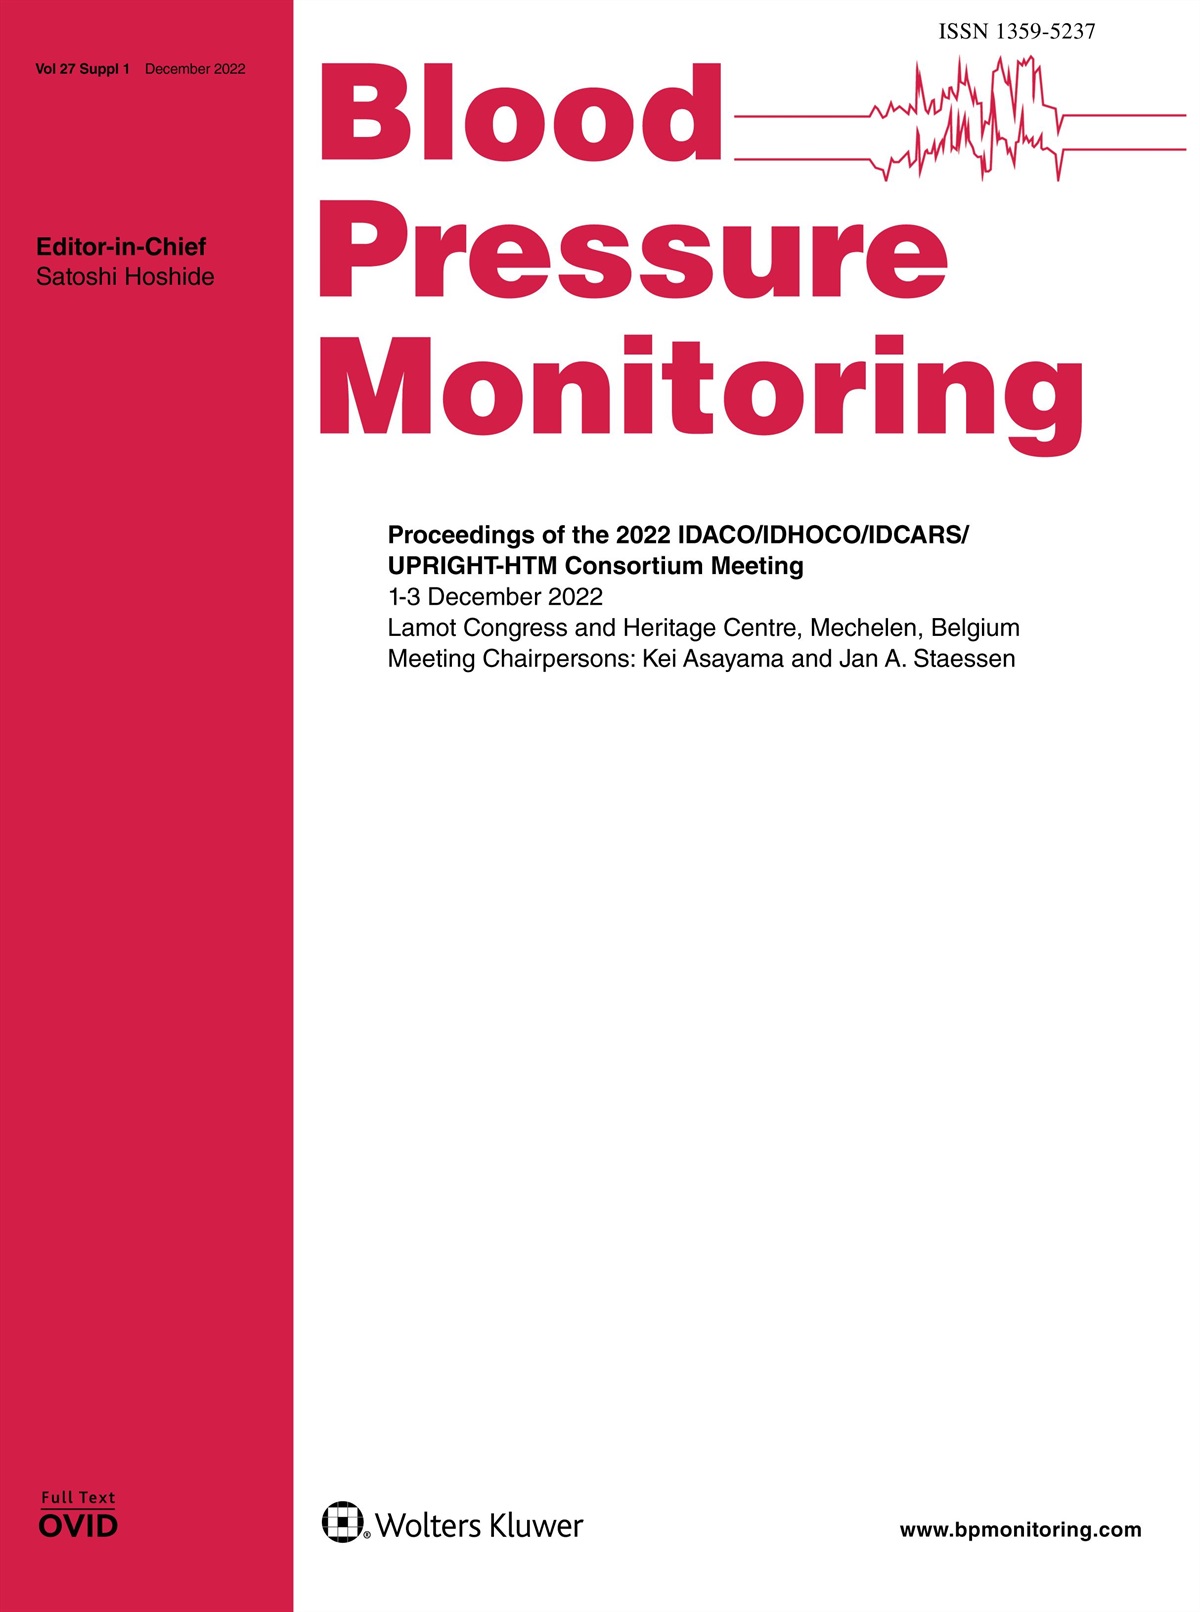 Should we rethink the blood pressure targets in hypertension guidelines?